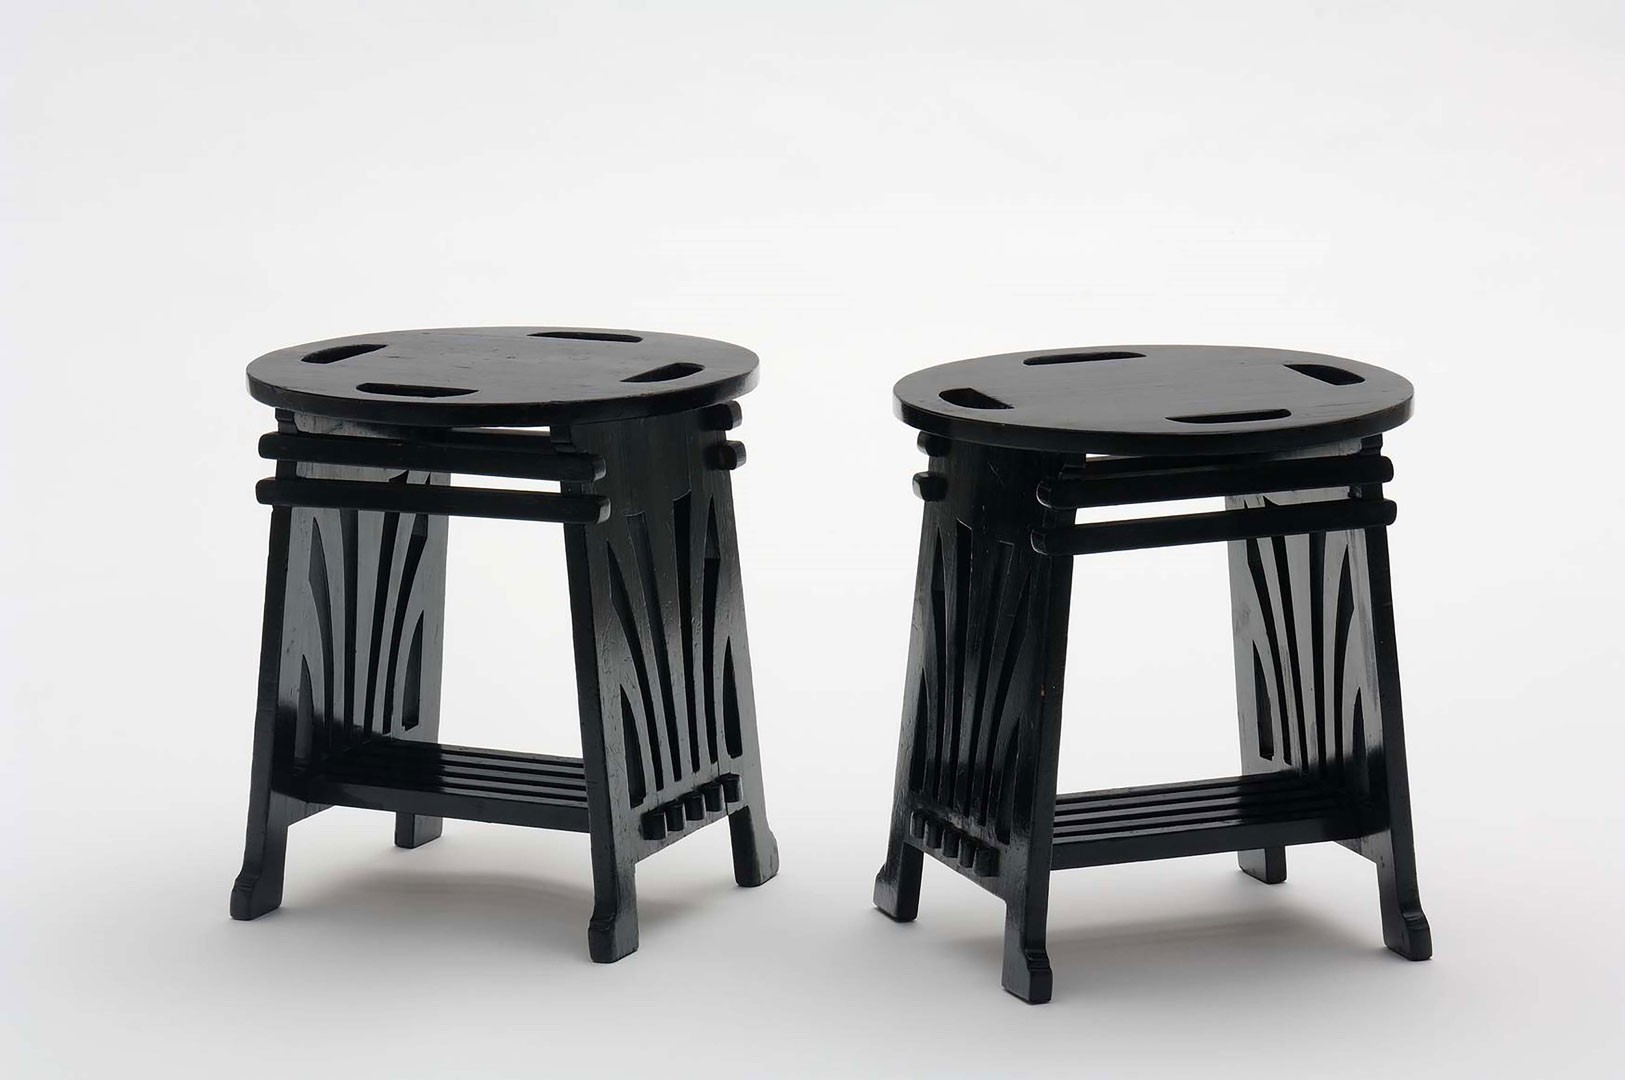 <BODY>Josef Hoffmann, Two stools from Koloman Moser’s studio furniture, 1898<br />© MAK/Georg Mayer<br /><br /></BODY>